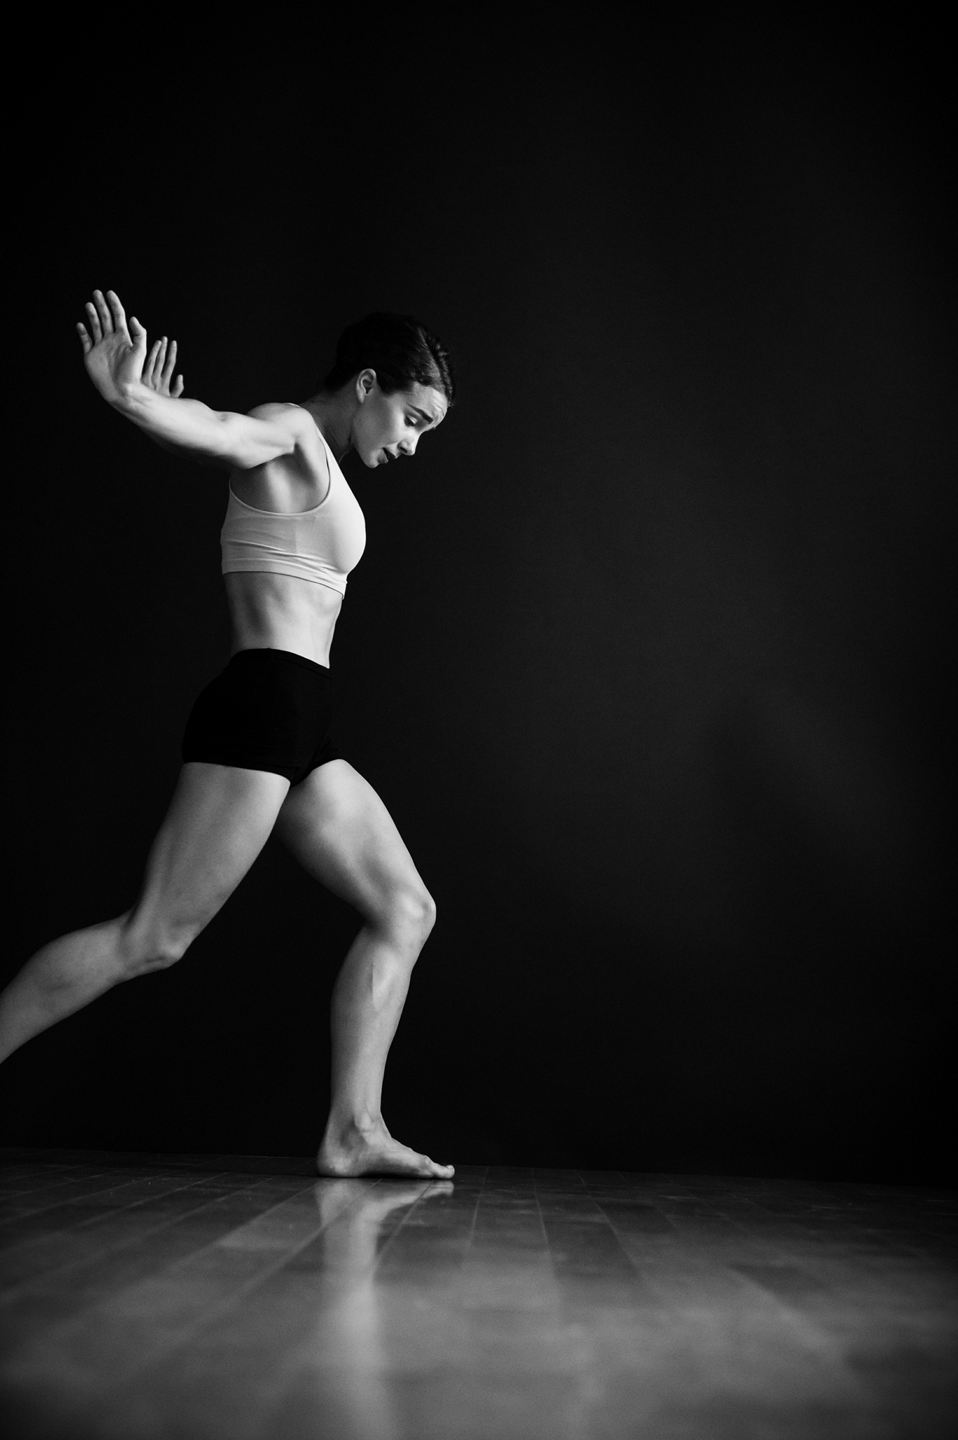 Los Angeles Dance Portrait Photo - Olga Sokolova - by Tommy Xing Photography 09.JPG